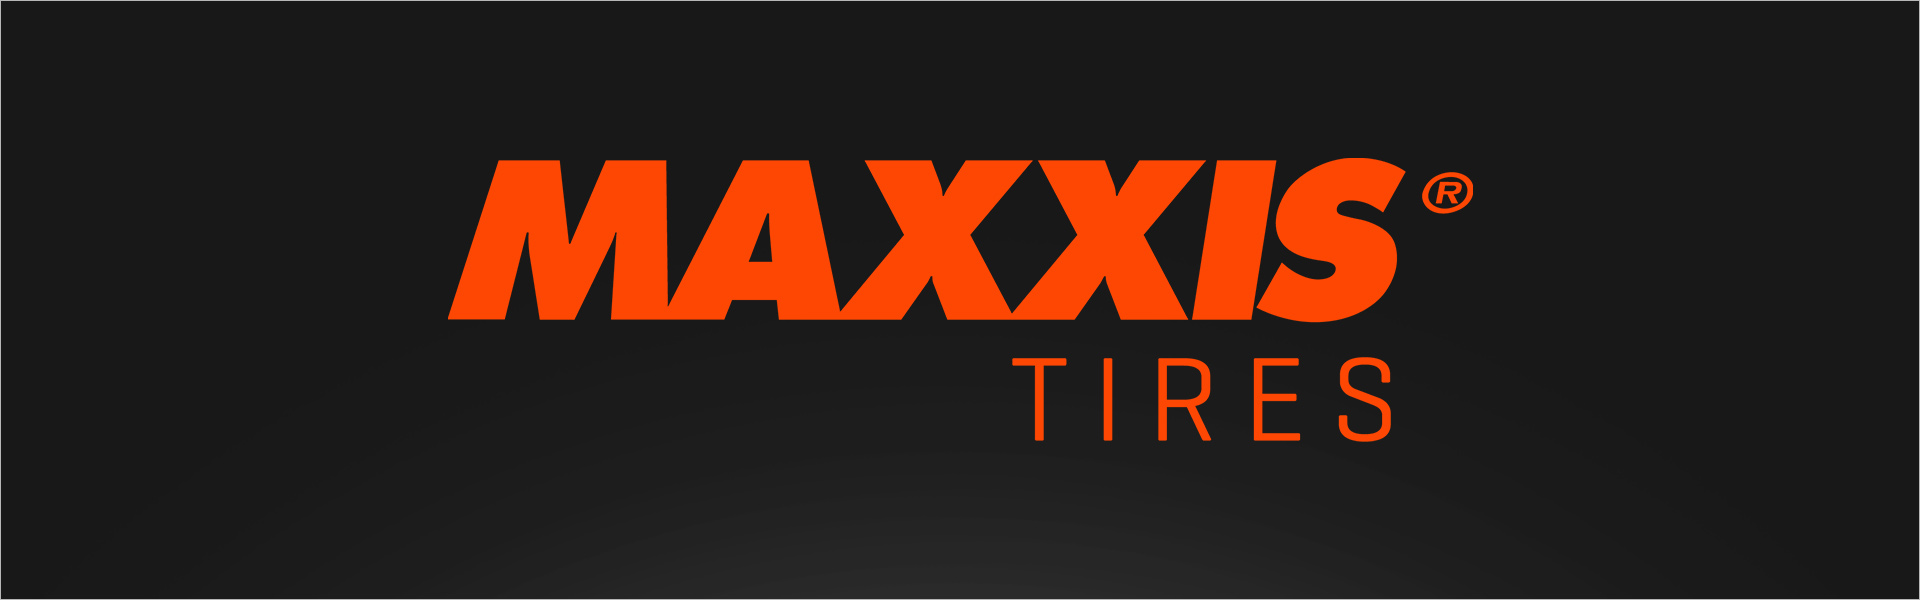 MAXXIS Vansmart MCV3+ 195/75 16 107/105S Maxxis